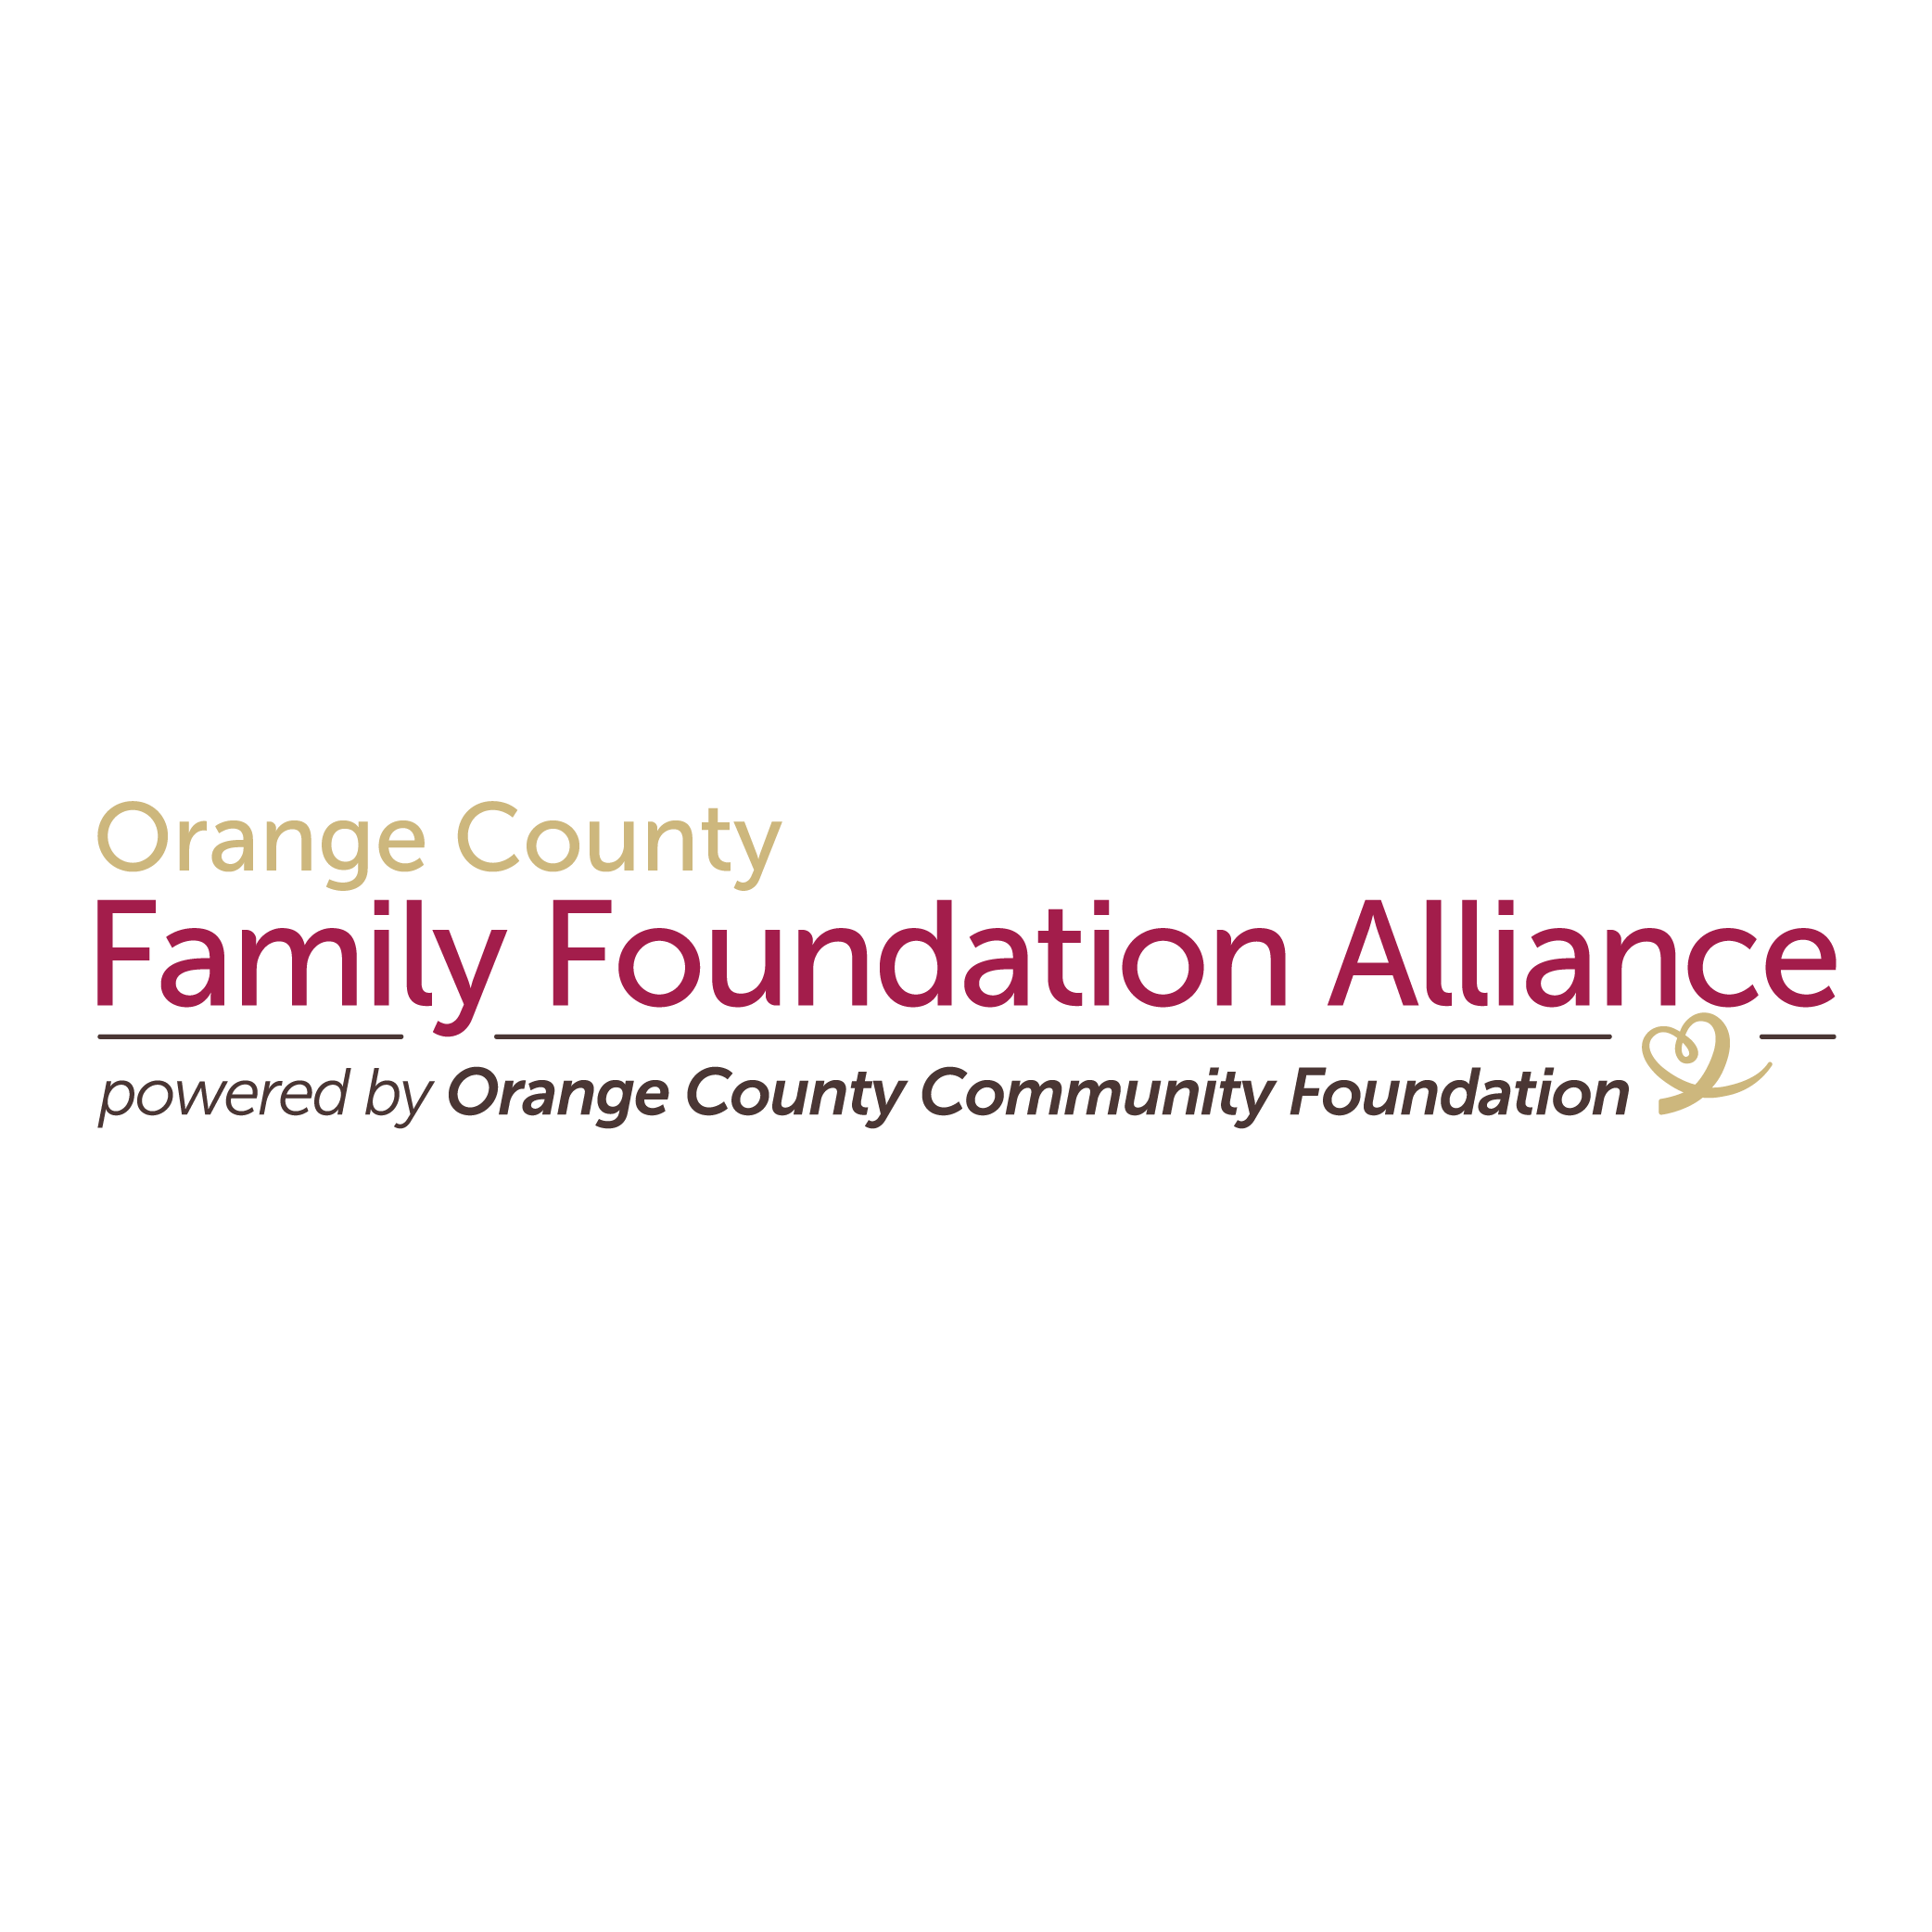 OC Family Foundation Alliance